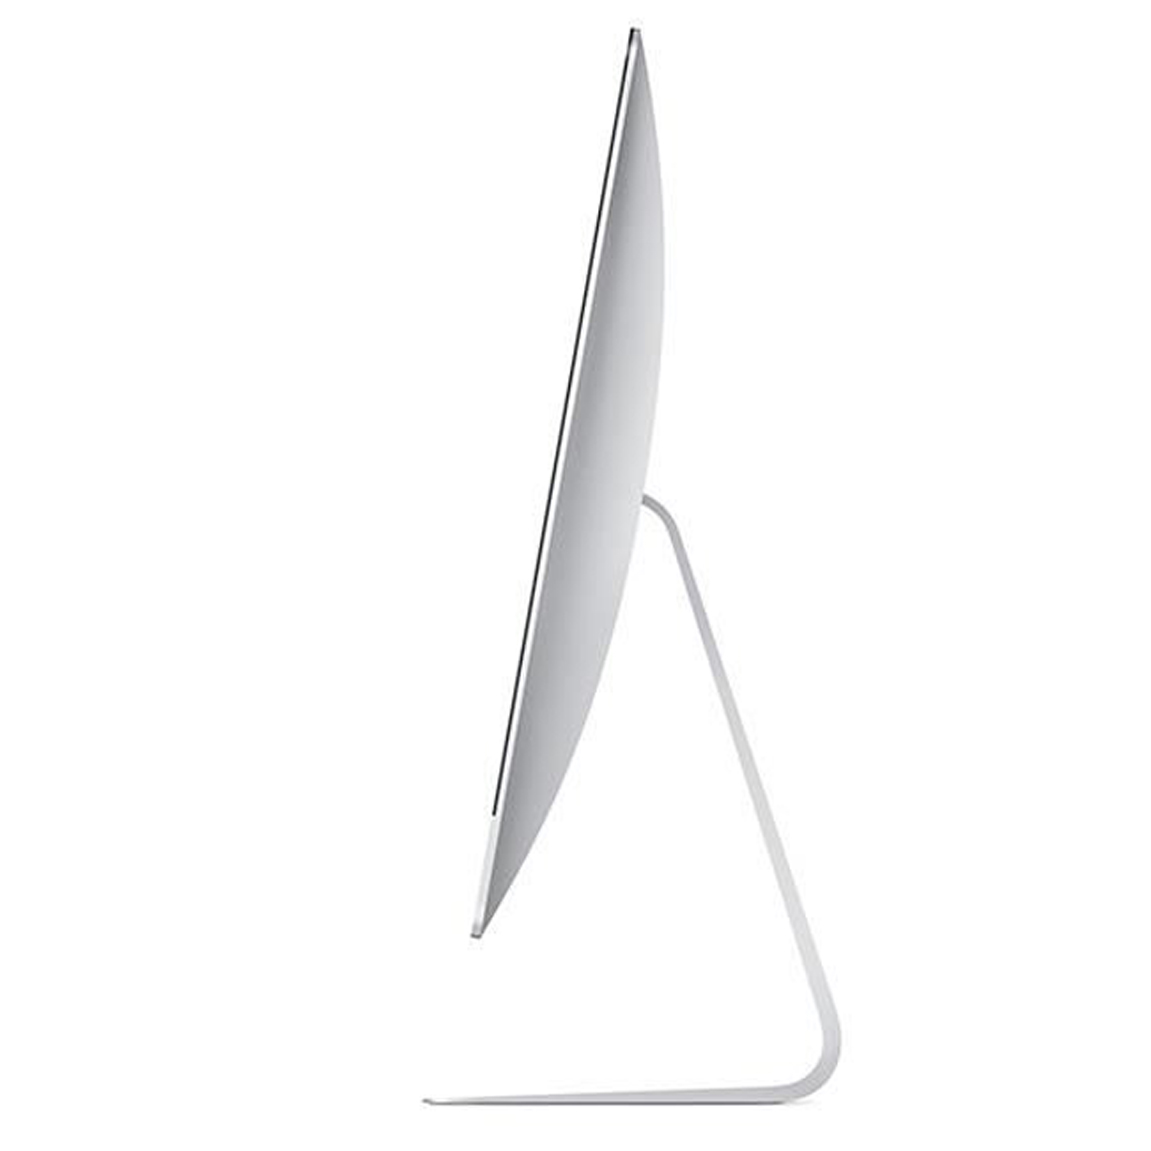 iMac MK462  Model 2015  27Inch / Core i5 2.8Ghz 8GB 1TB /  New 99%